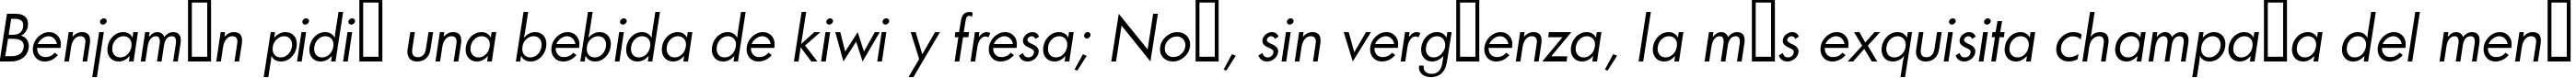 Пример написания шрифтом a_FuturicaBook Italic текста на испанском